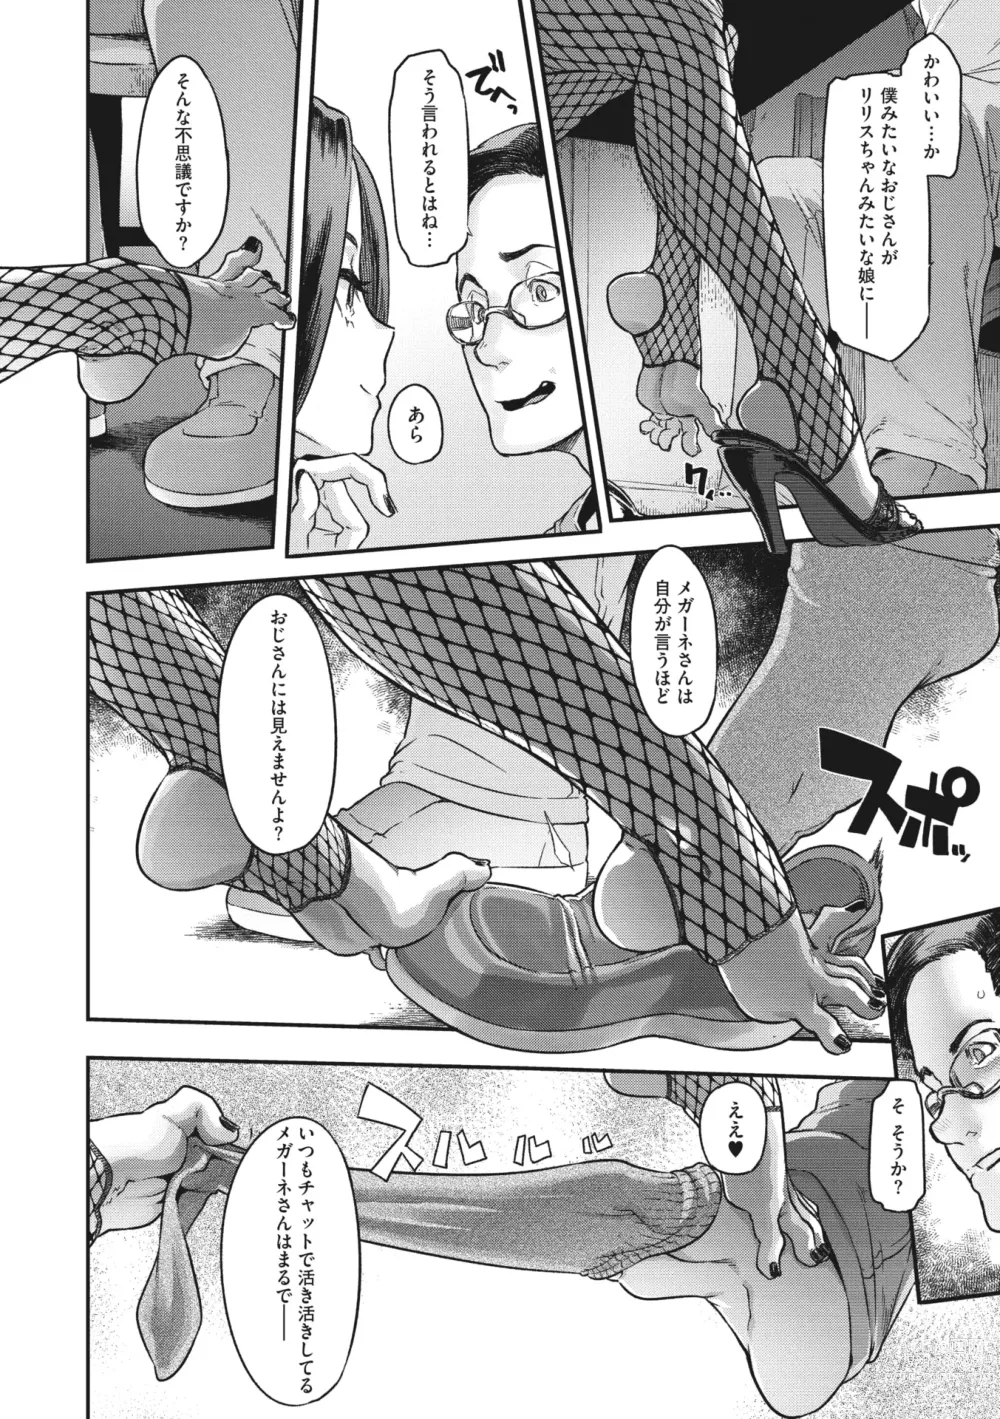 Page 9 of manga 行きずり夜想曲